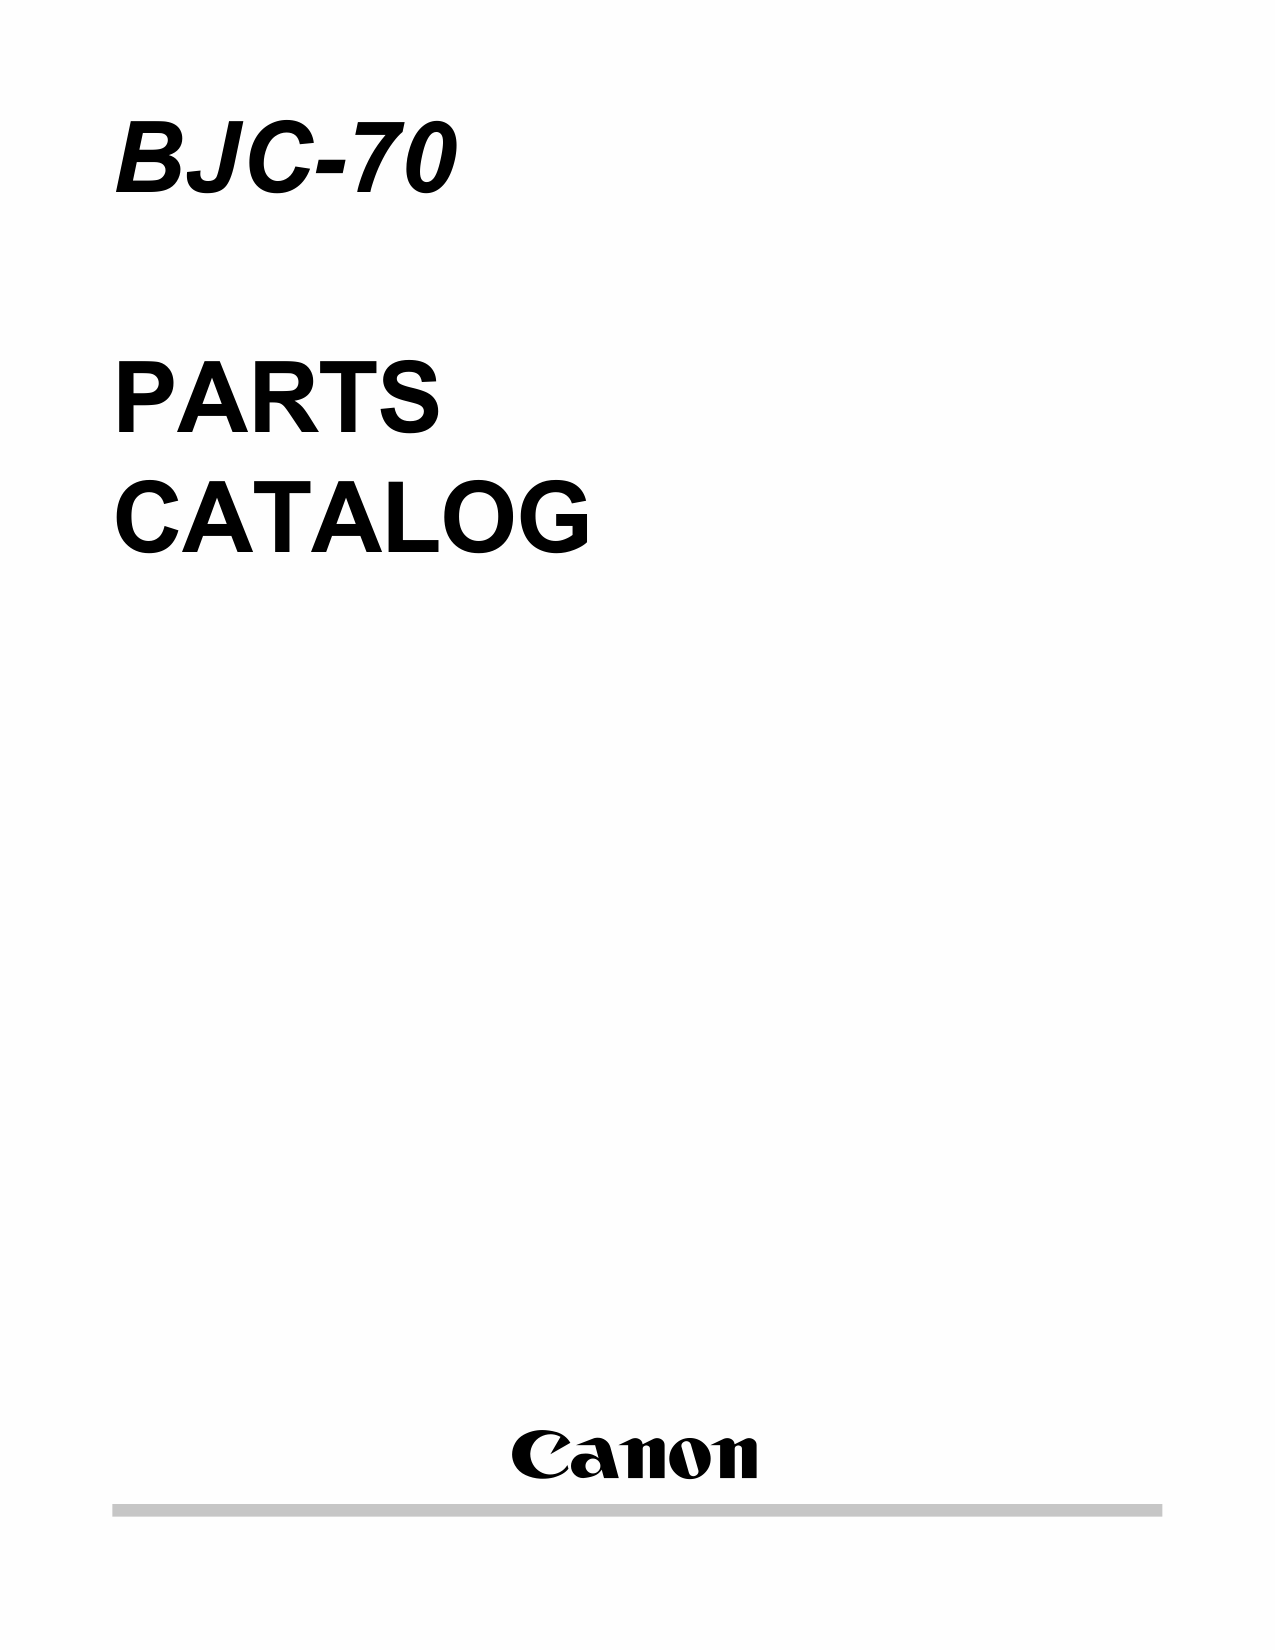 Canon BubbleJet BJC-70 Parts Catalog Manual-1